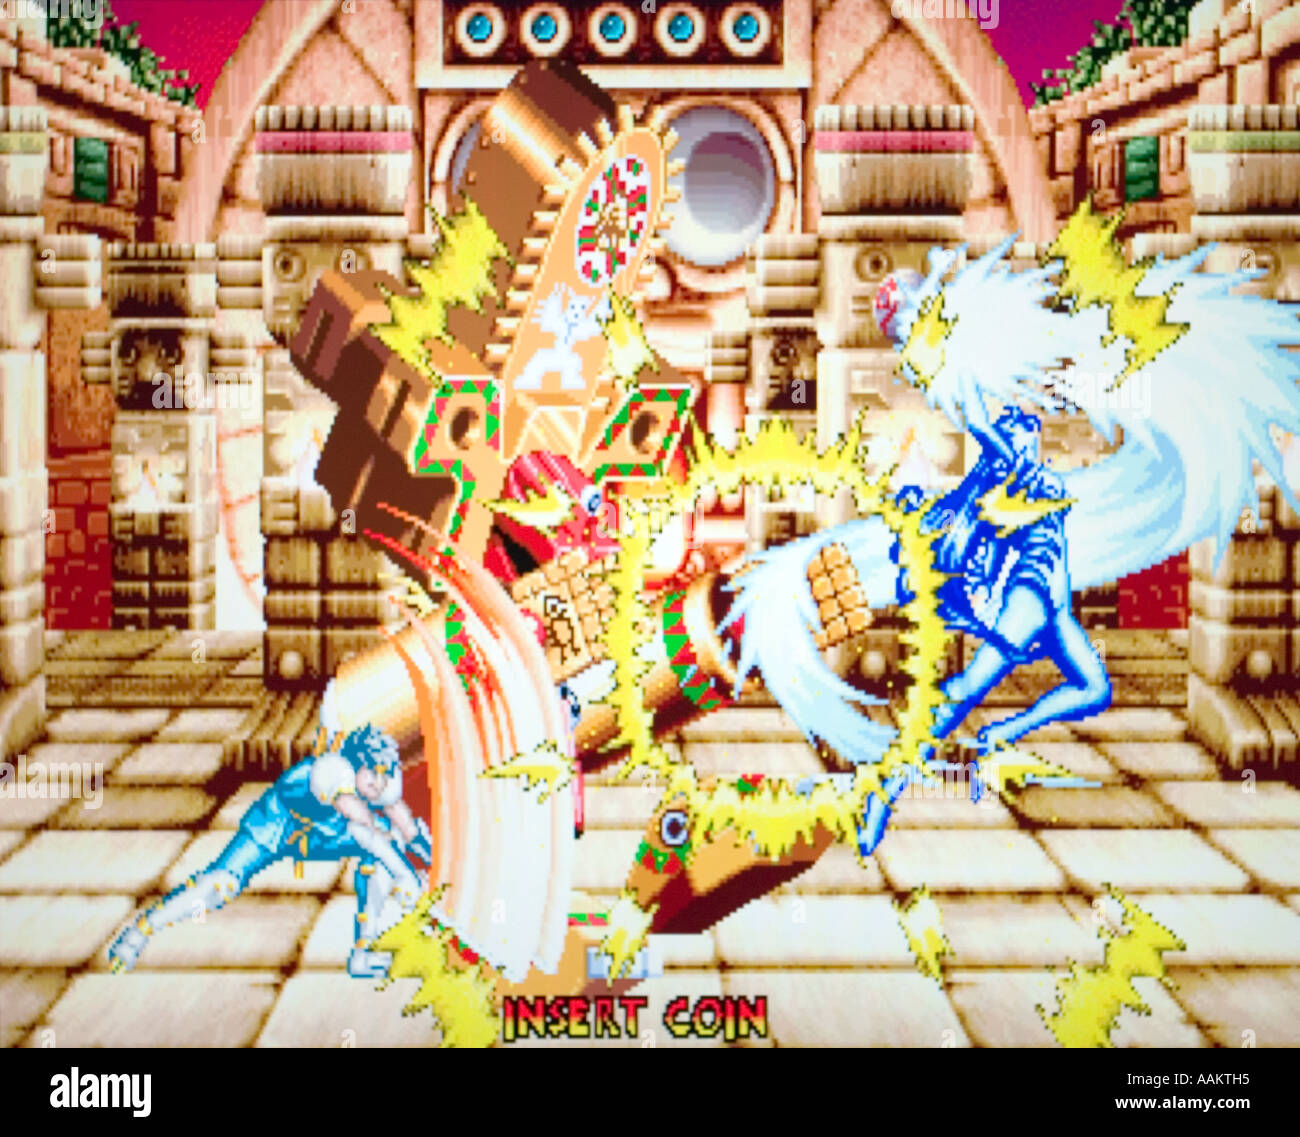 Metamoqester Banpresto Pandorabox millésime 1995 jeu vidéo Arcade écran - EDITORIAL UTILISEZ UNIQUEMENT Banque D'Images